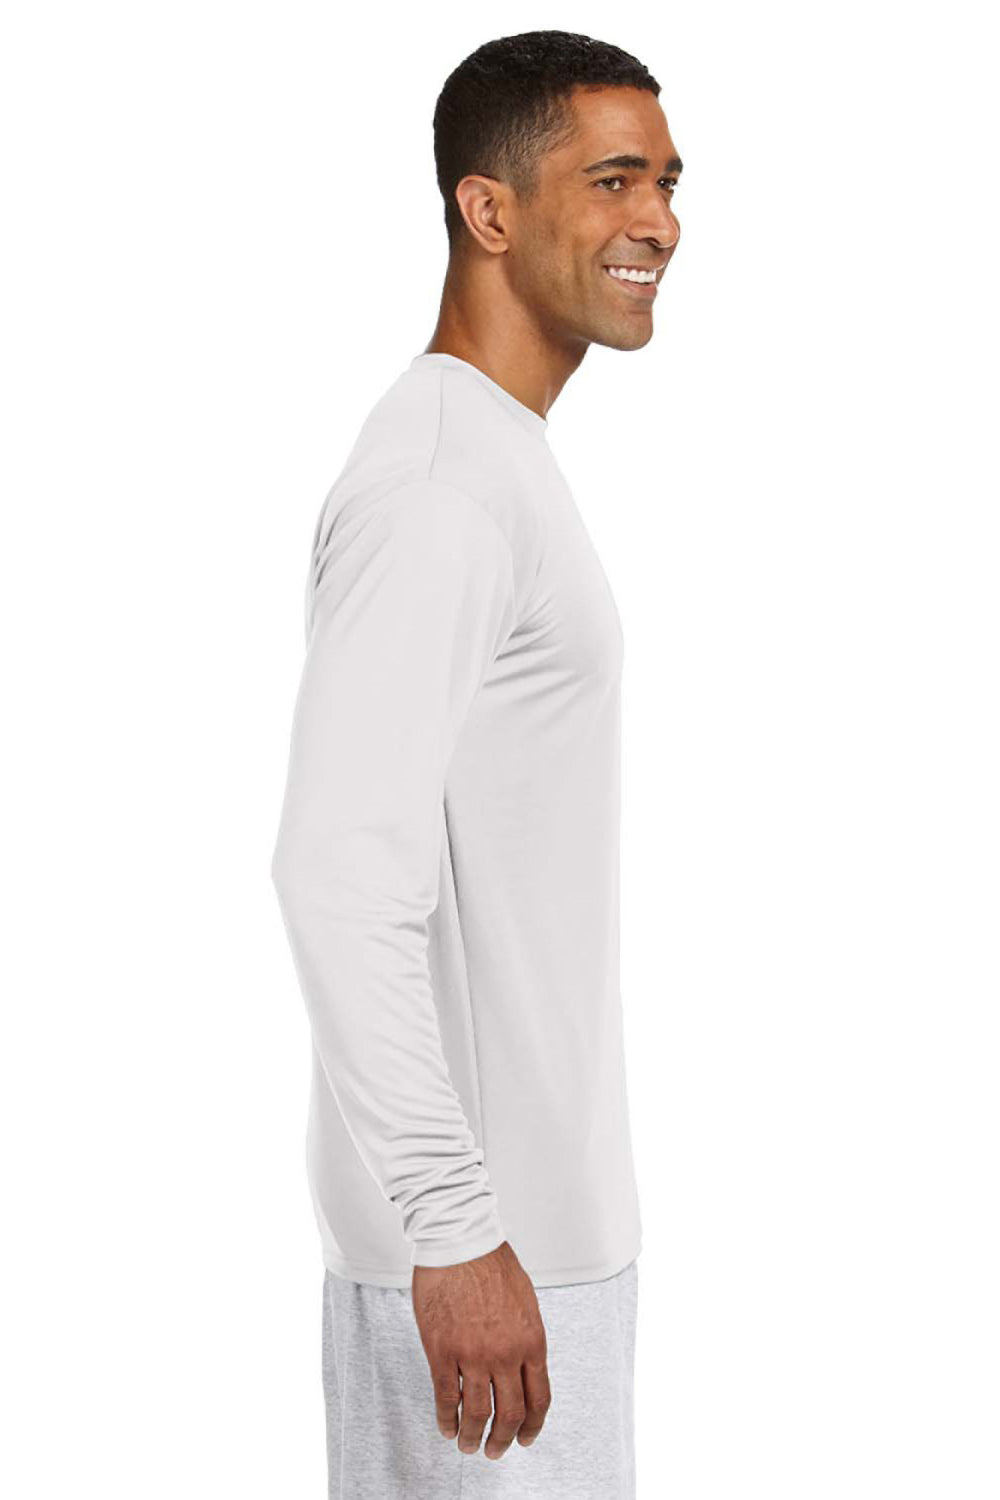 A4 N3165 Mens Performance Moisture Wicking Long Sleeve Crewneck T-Shirt White Model Side